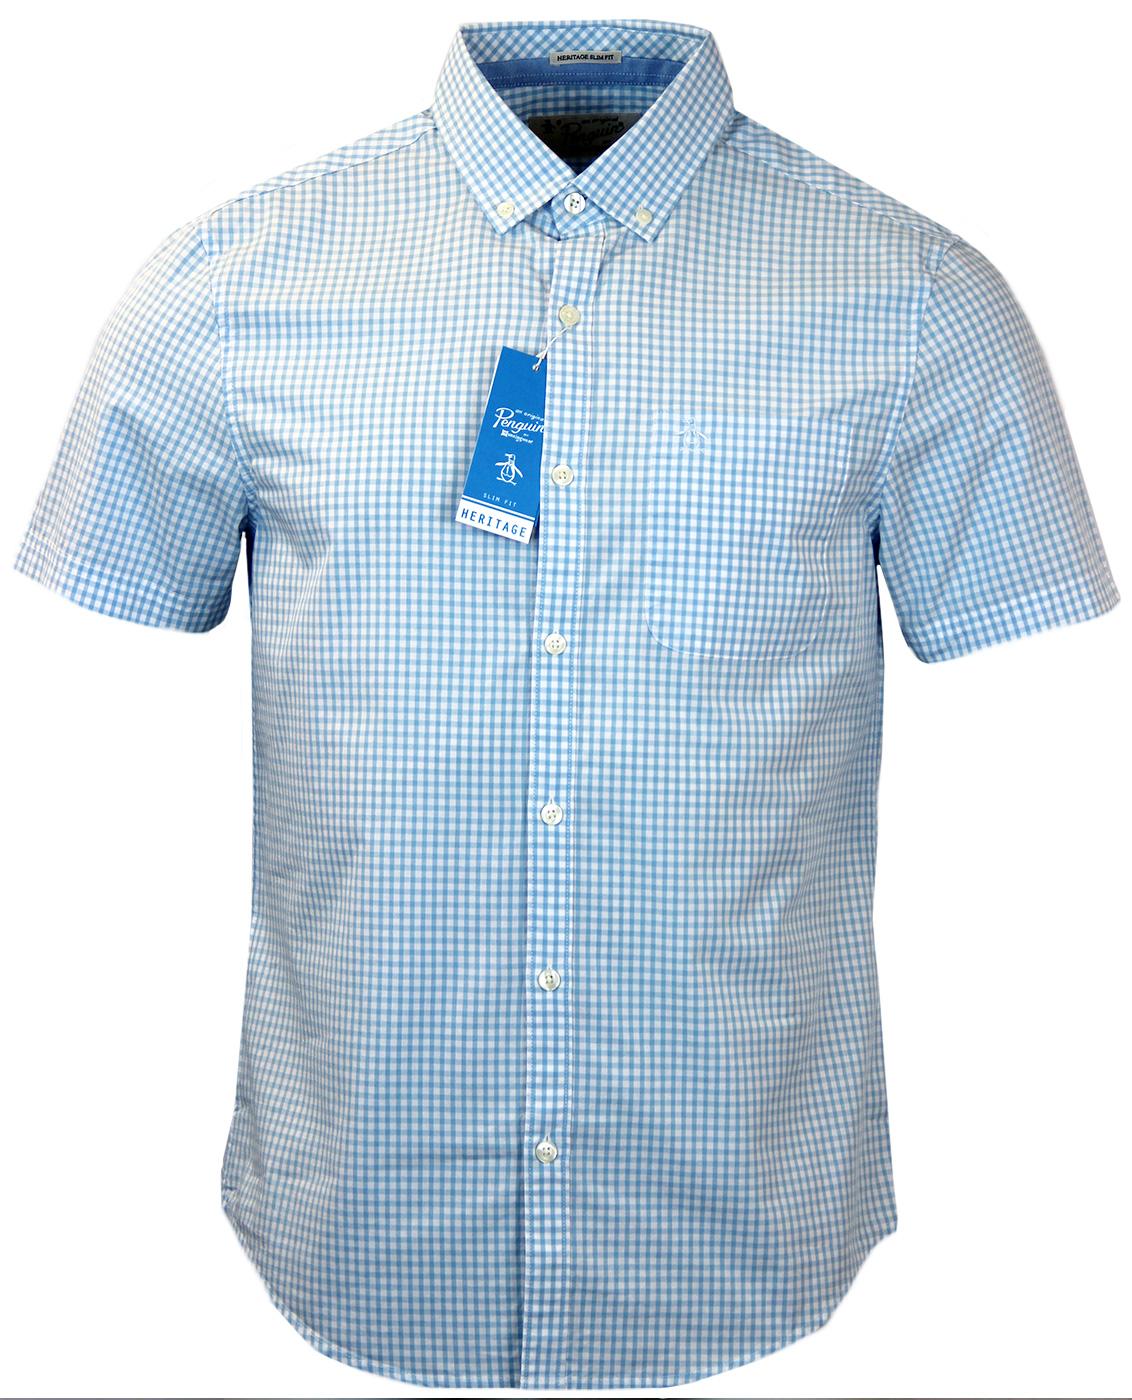 ORIGINAL PENGUIN Belan Retro Mod Gingham Shirt in Crystal Blue